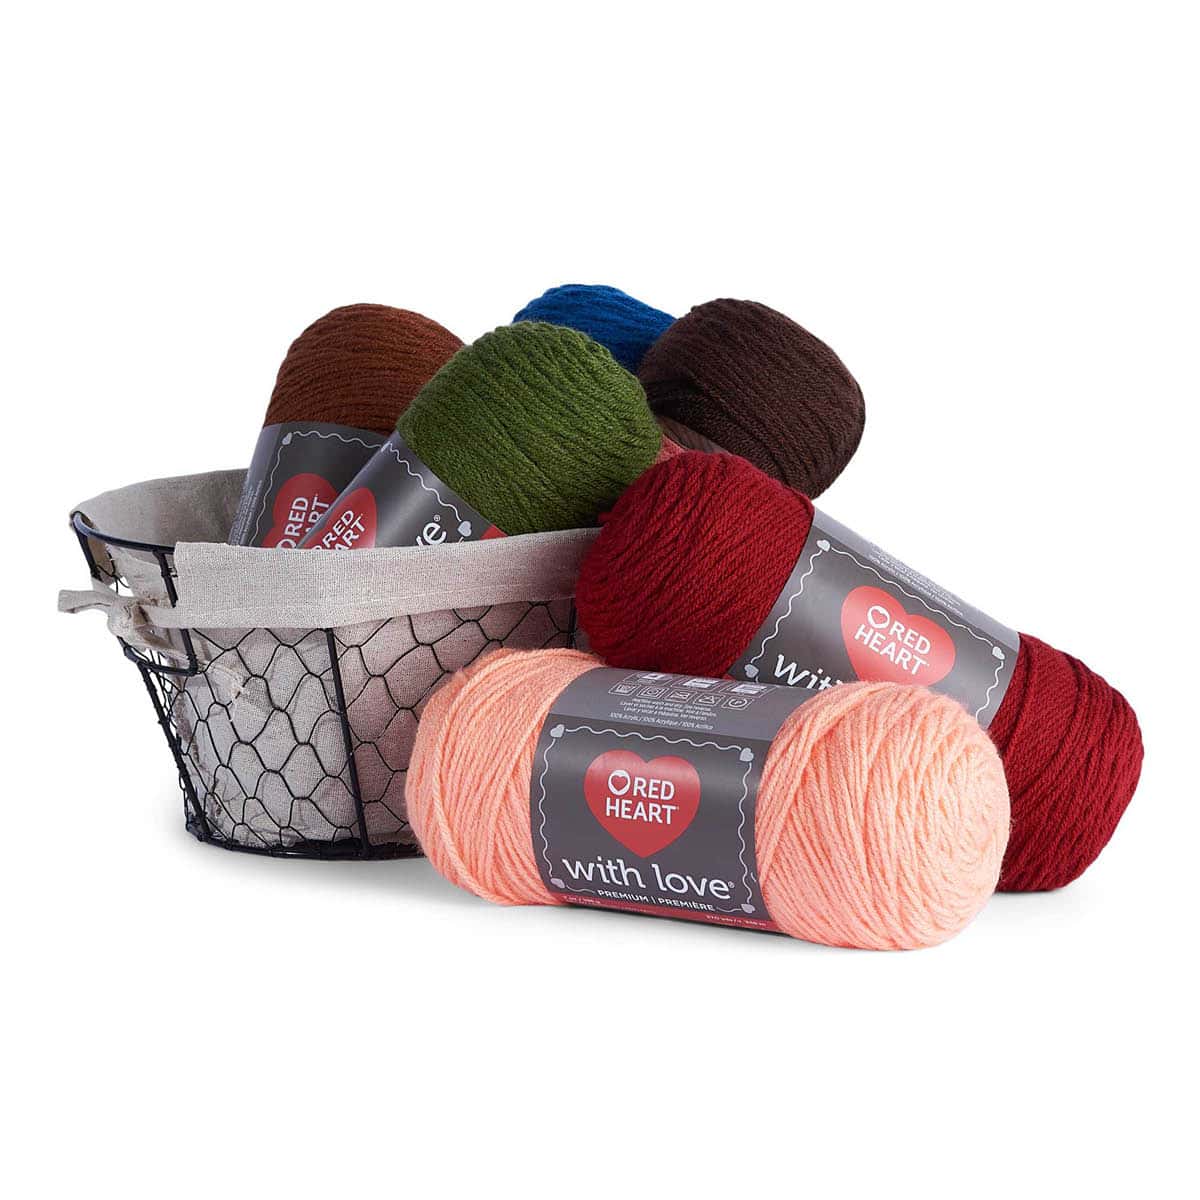 Crochet and Knitting Yarn Kits